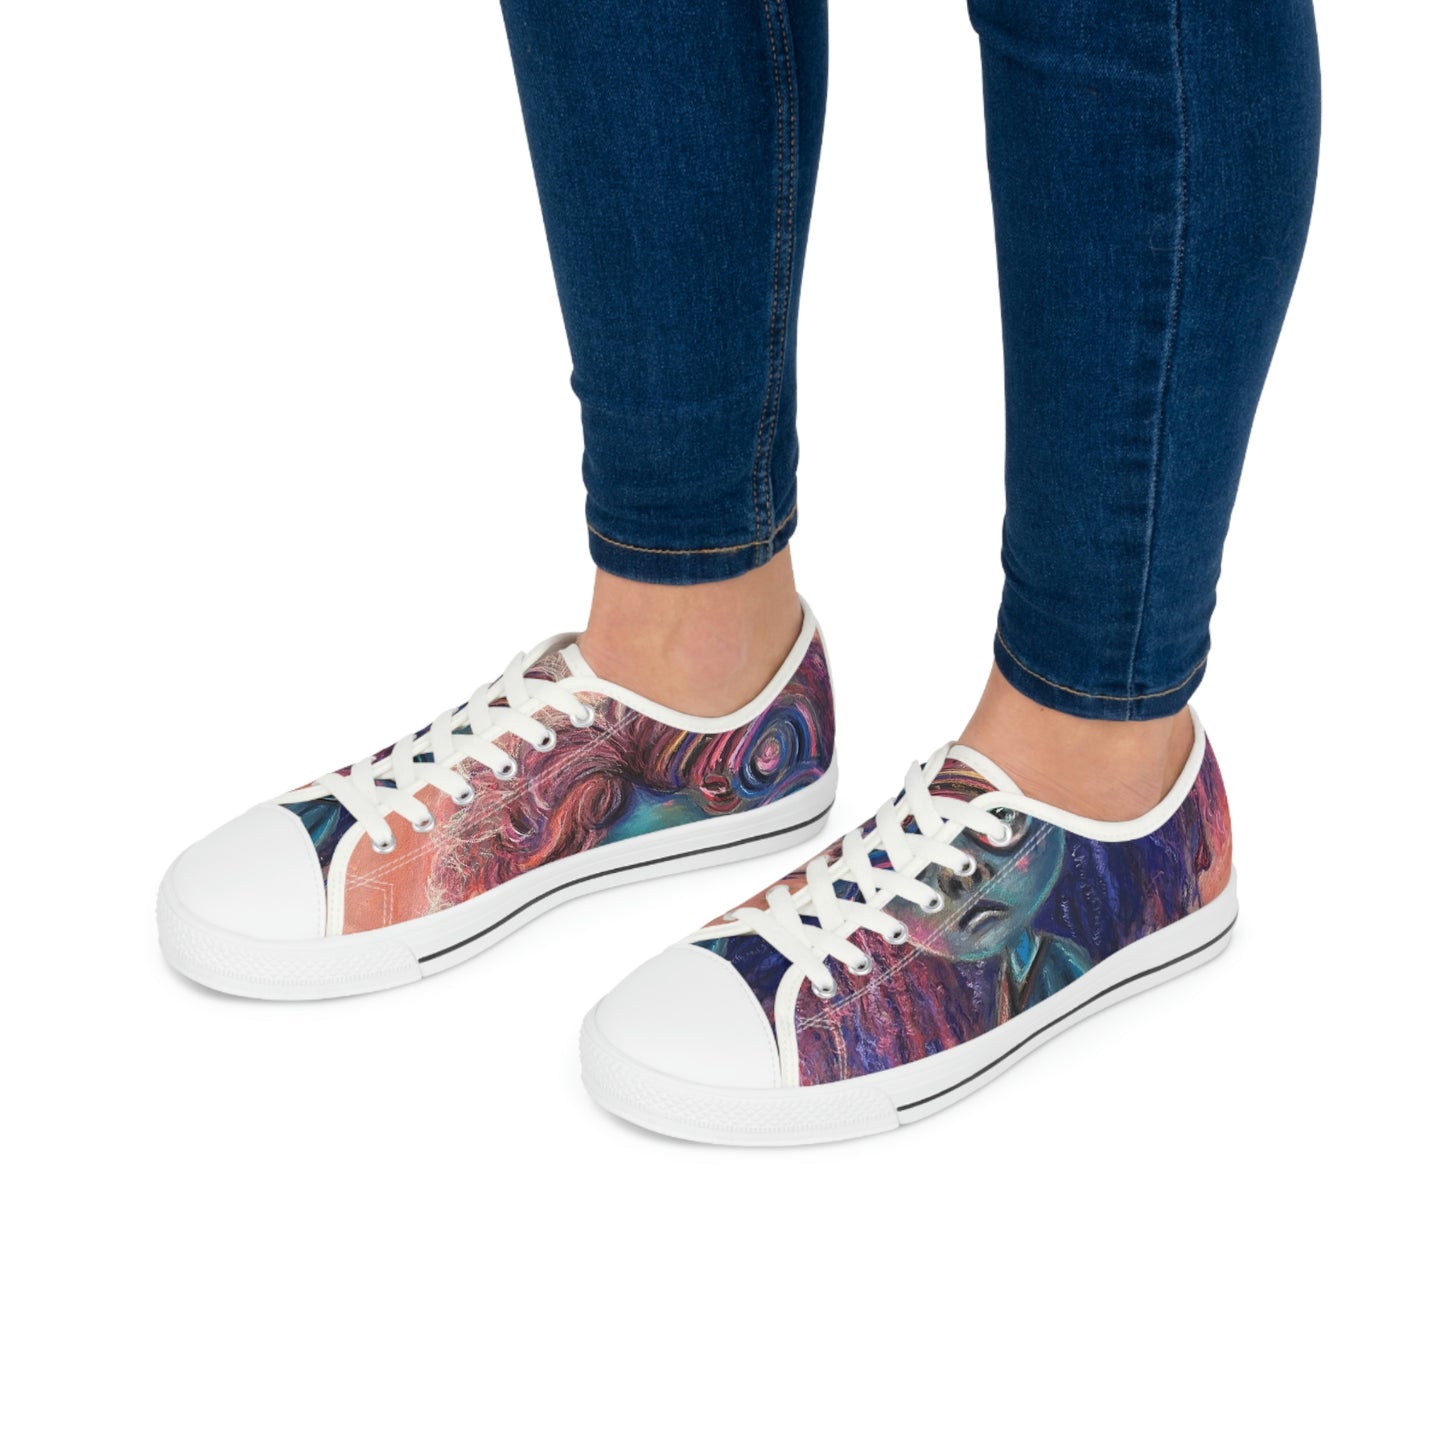 Colorful Surreal Art Women's Low Top Sneakers